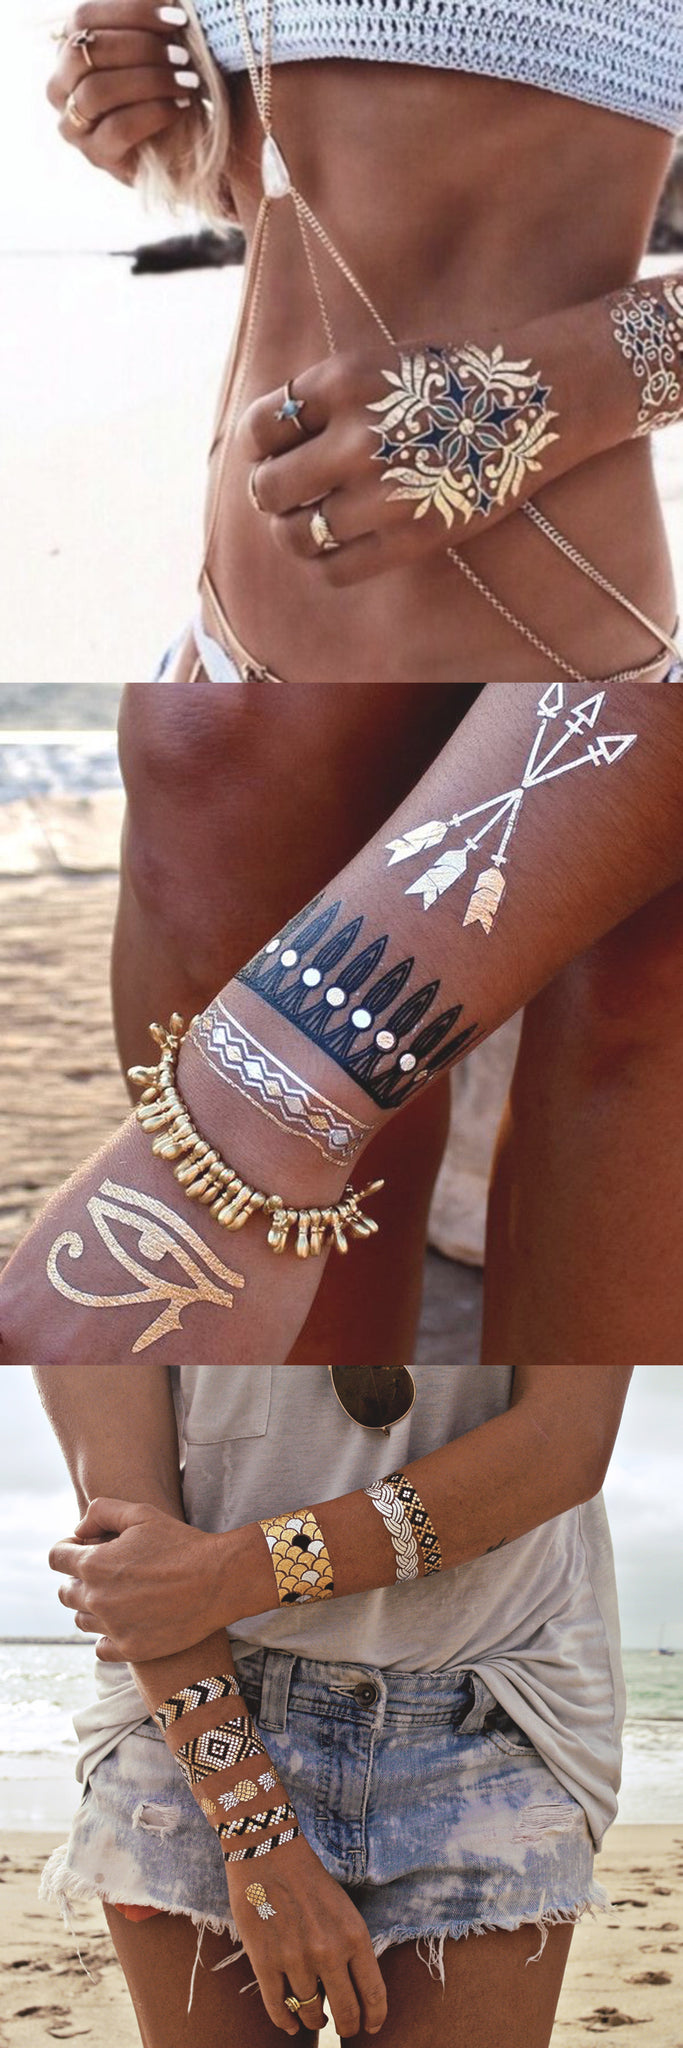 Small Tribal Arrow Tattoo Ideas for Women - Boho Simple Bracelet Tatt - Mandala Gold Metallic Flash Hand Tat - MyBodiArt.com